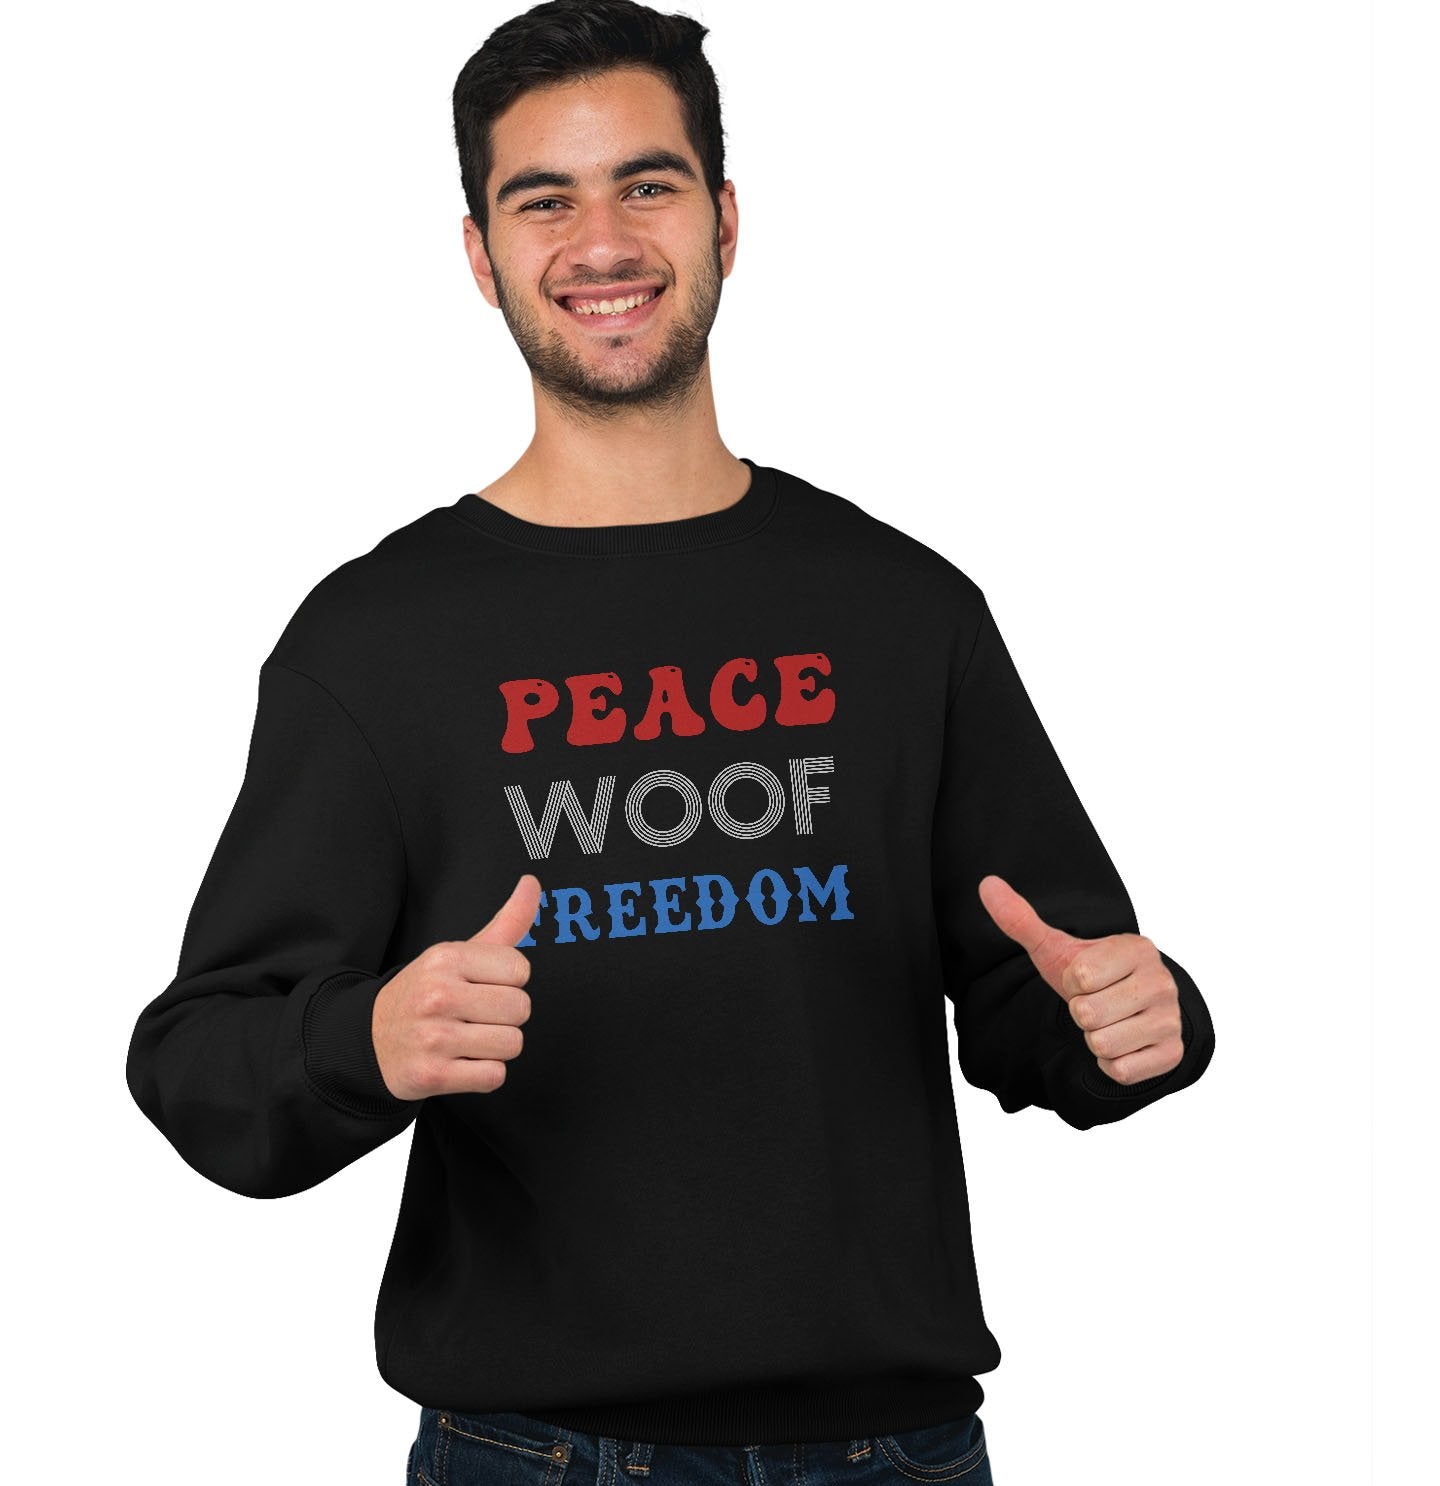 Peace Woof Freedom - Adult Unisex Crewneck Sweatshirt